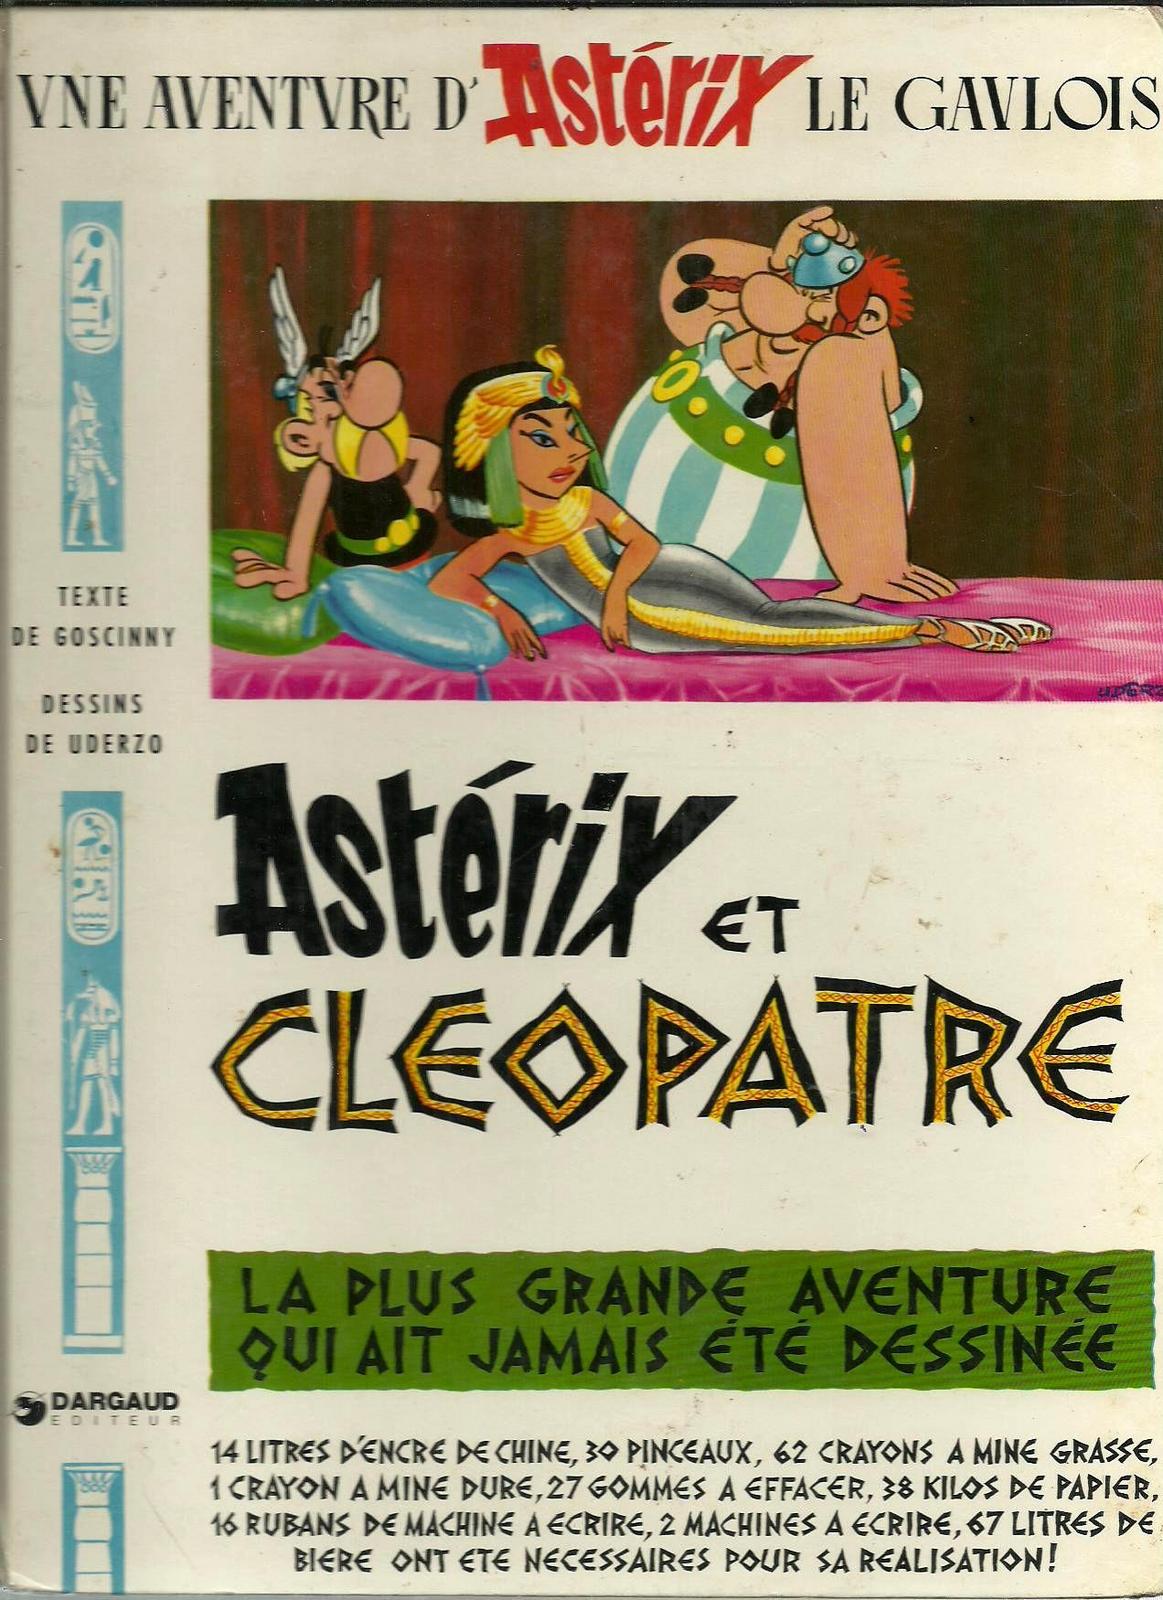 René Goscinny, Albert Uderzo: Asterix et Cleopatre (French language, 1985, Dargaud)